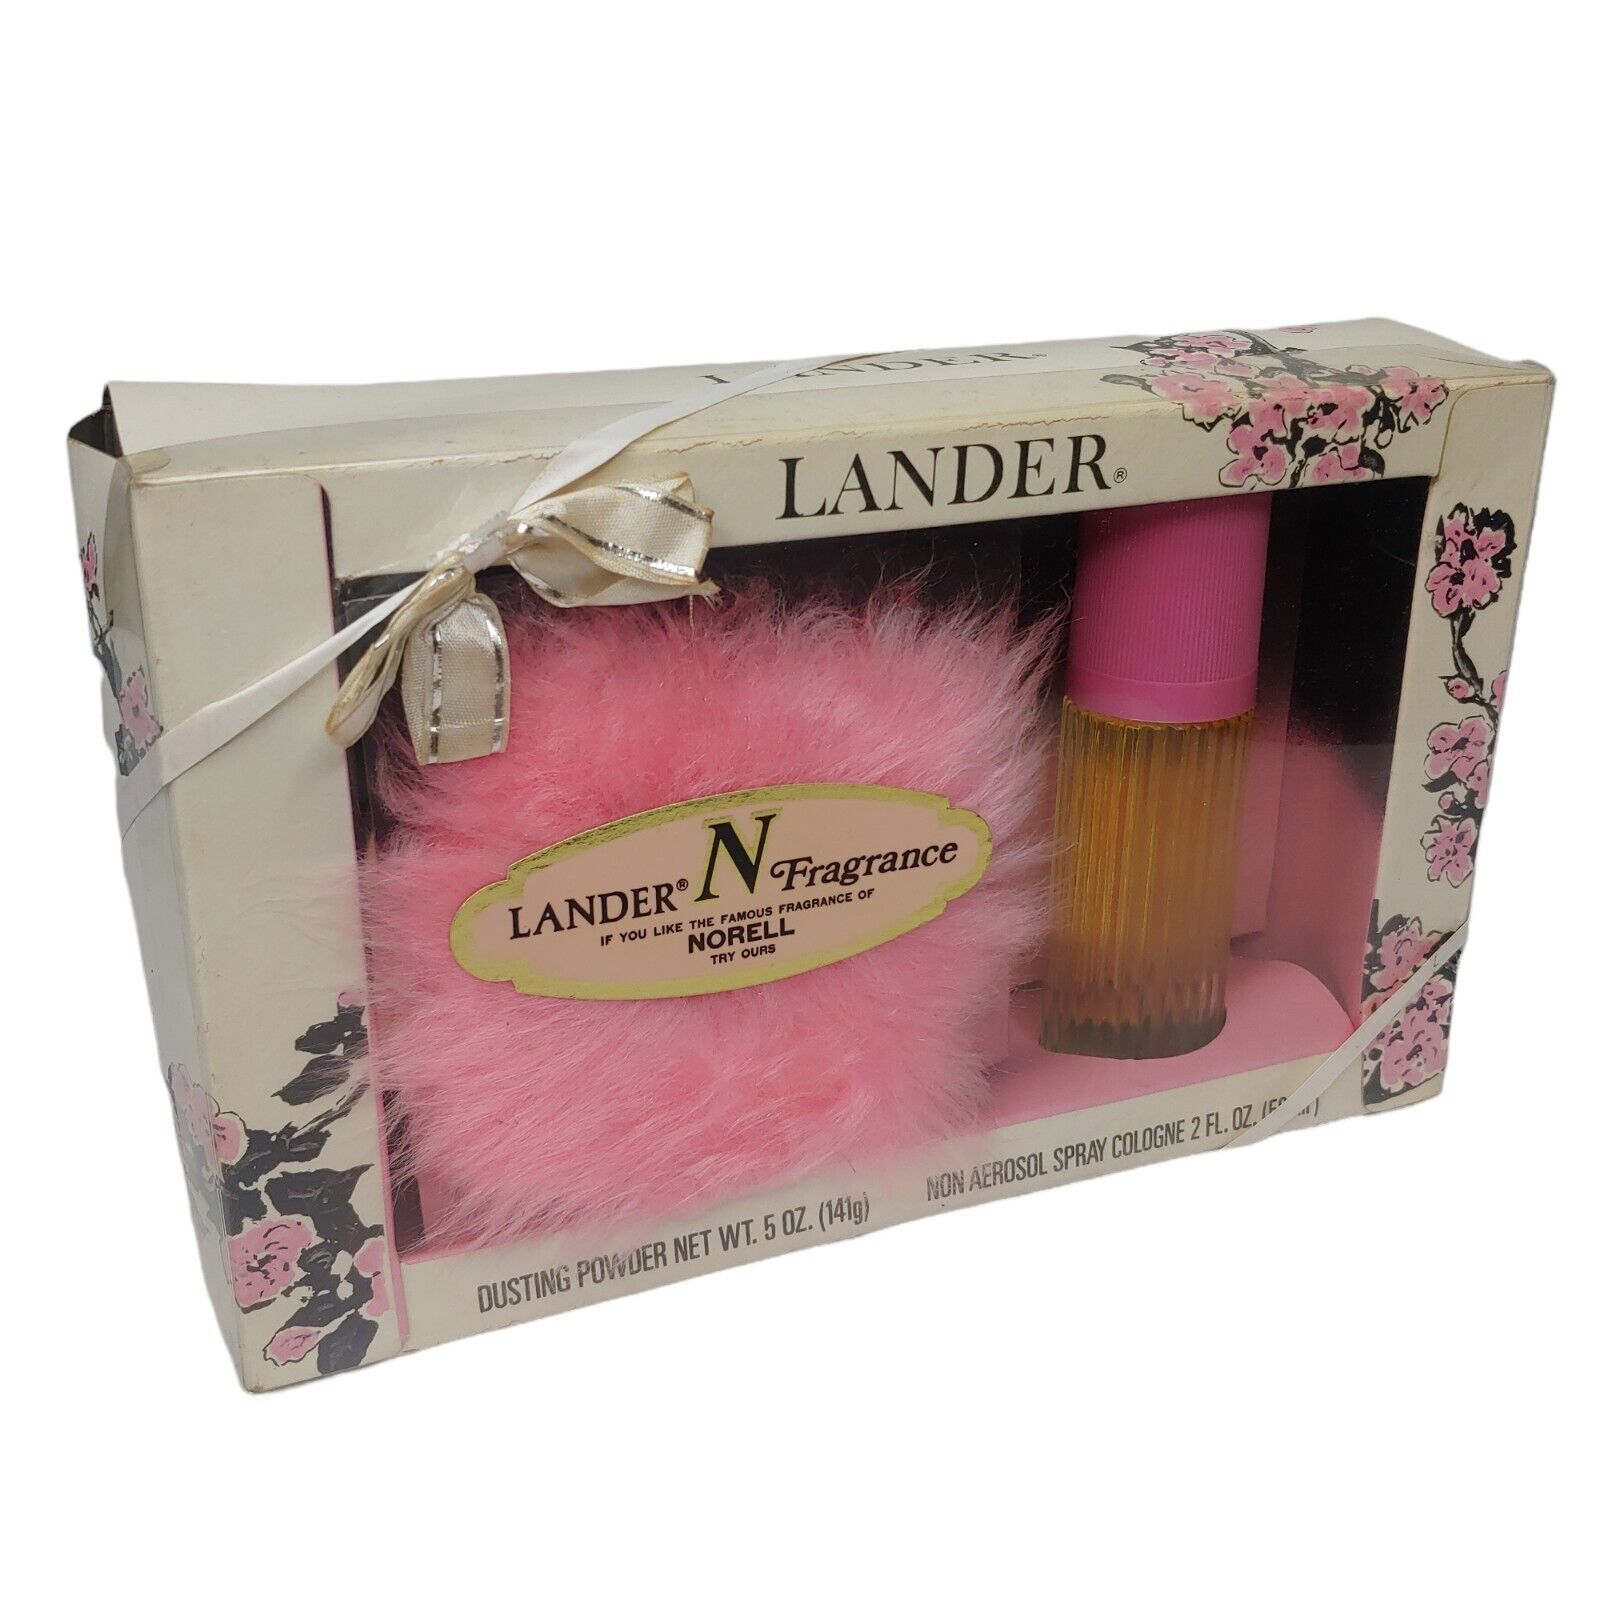 Vintage Lander Fragrance Women's Spray 2oz Cologne Dusting Powder Gift Box Set